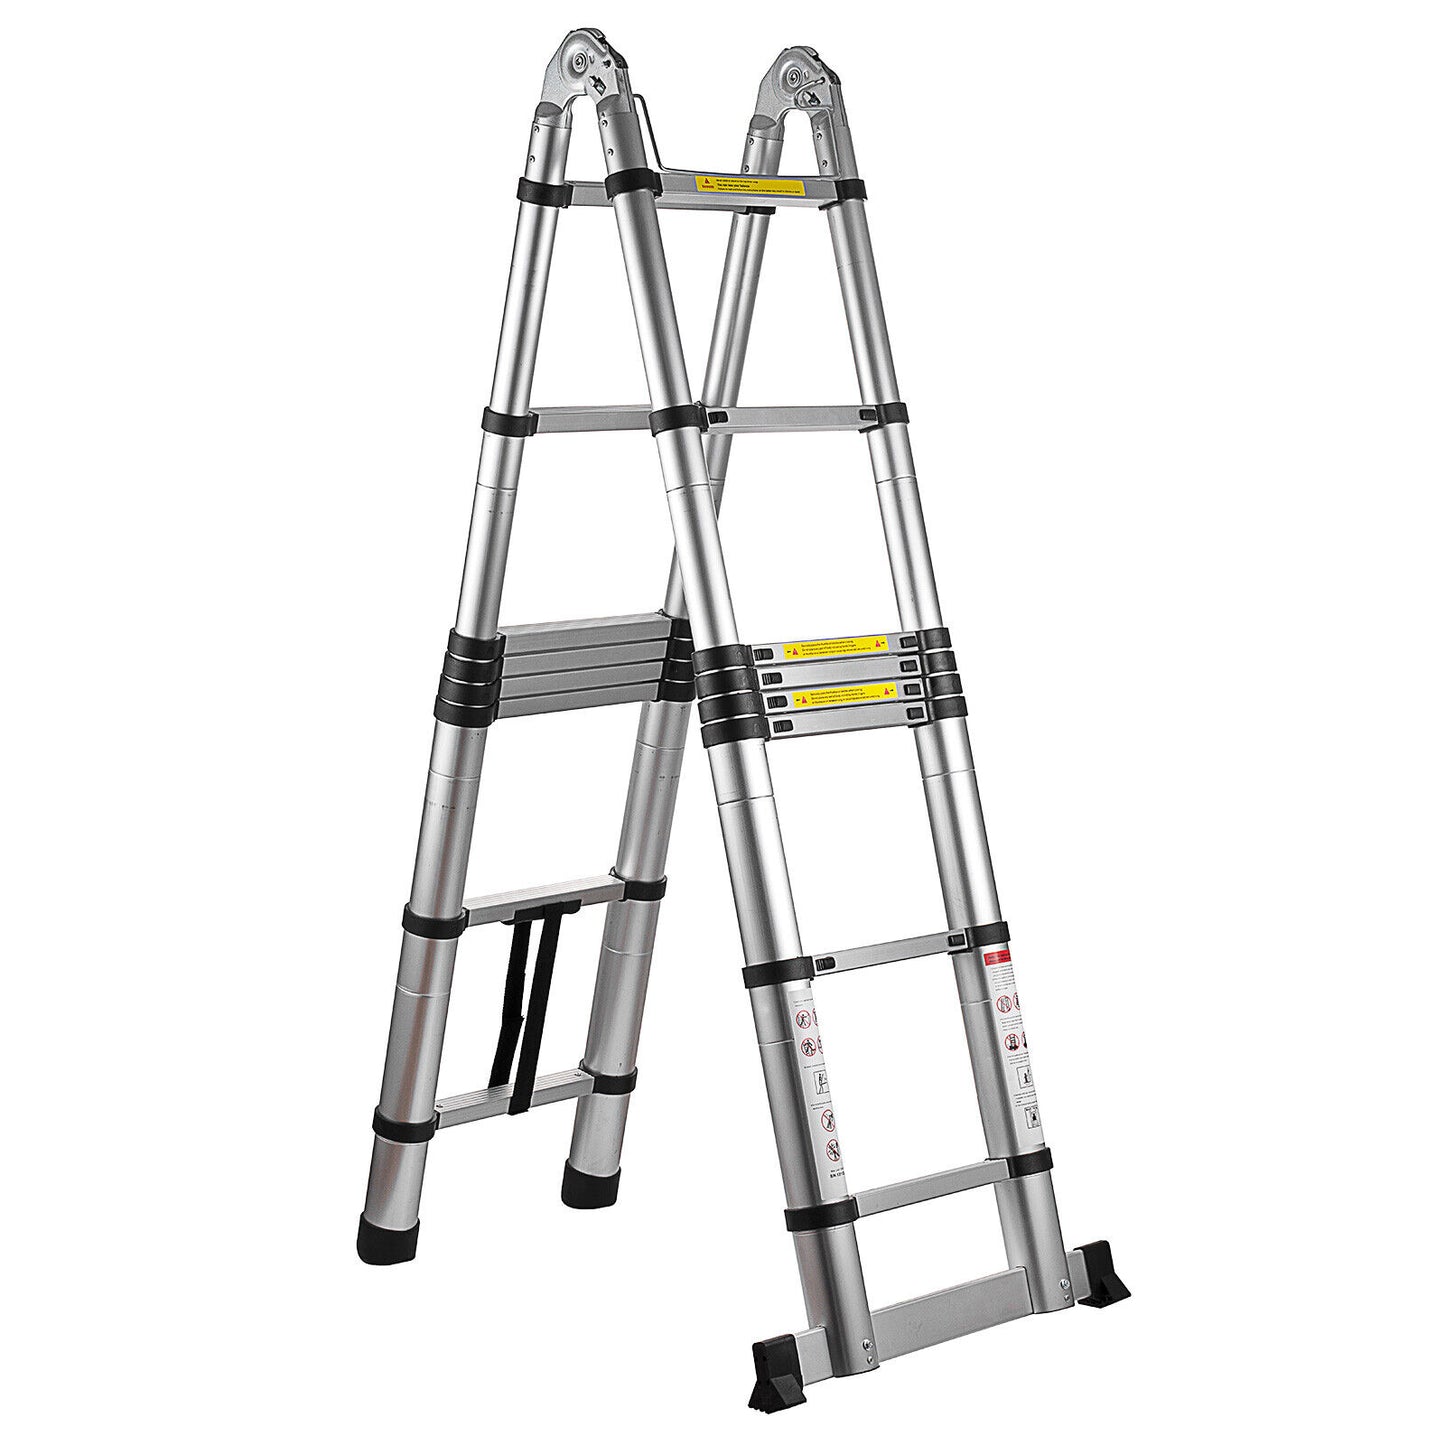 16.5FT Aluminum Telescopic Ladder Multi-Purpose Folding Extension 330LBS Load